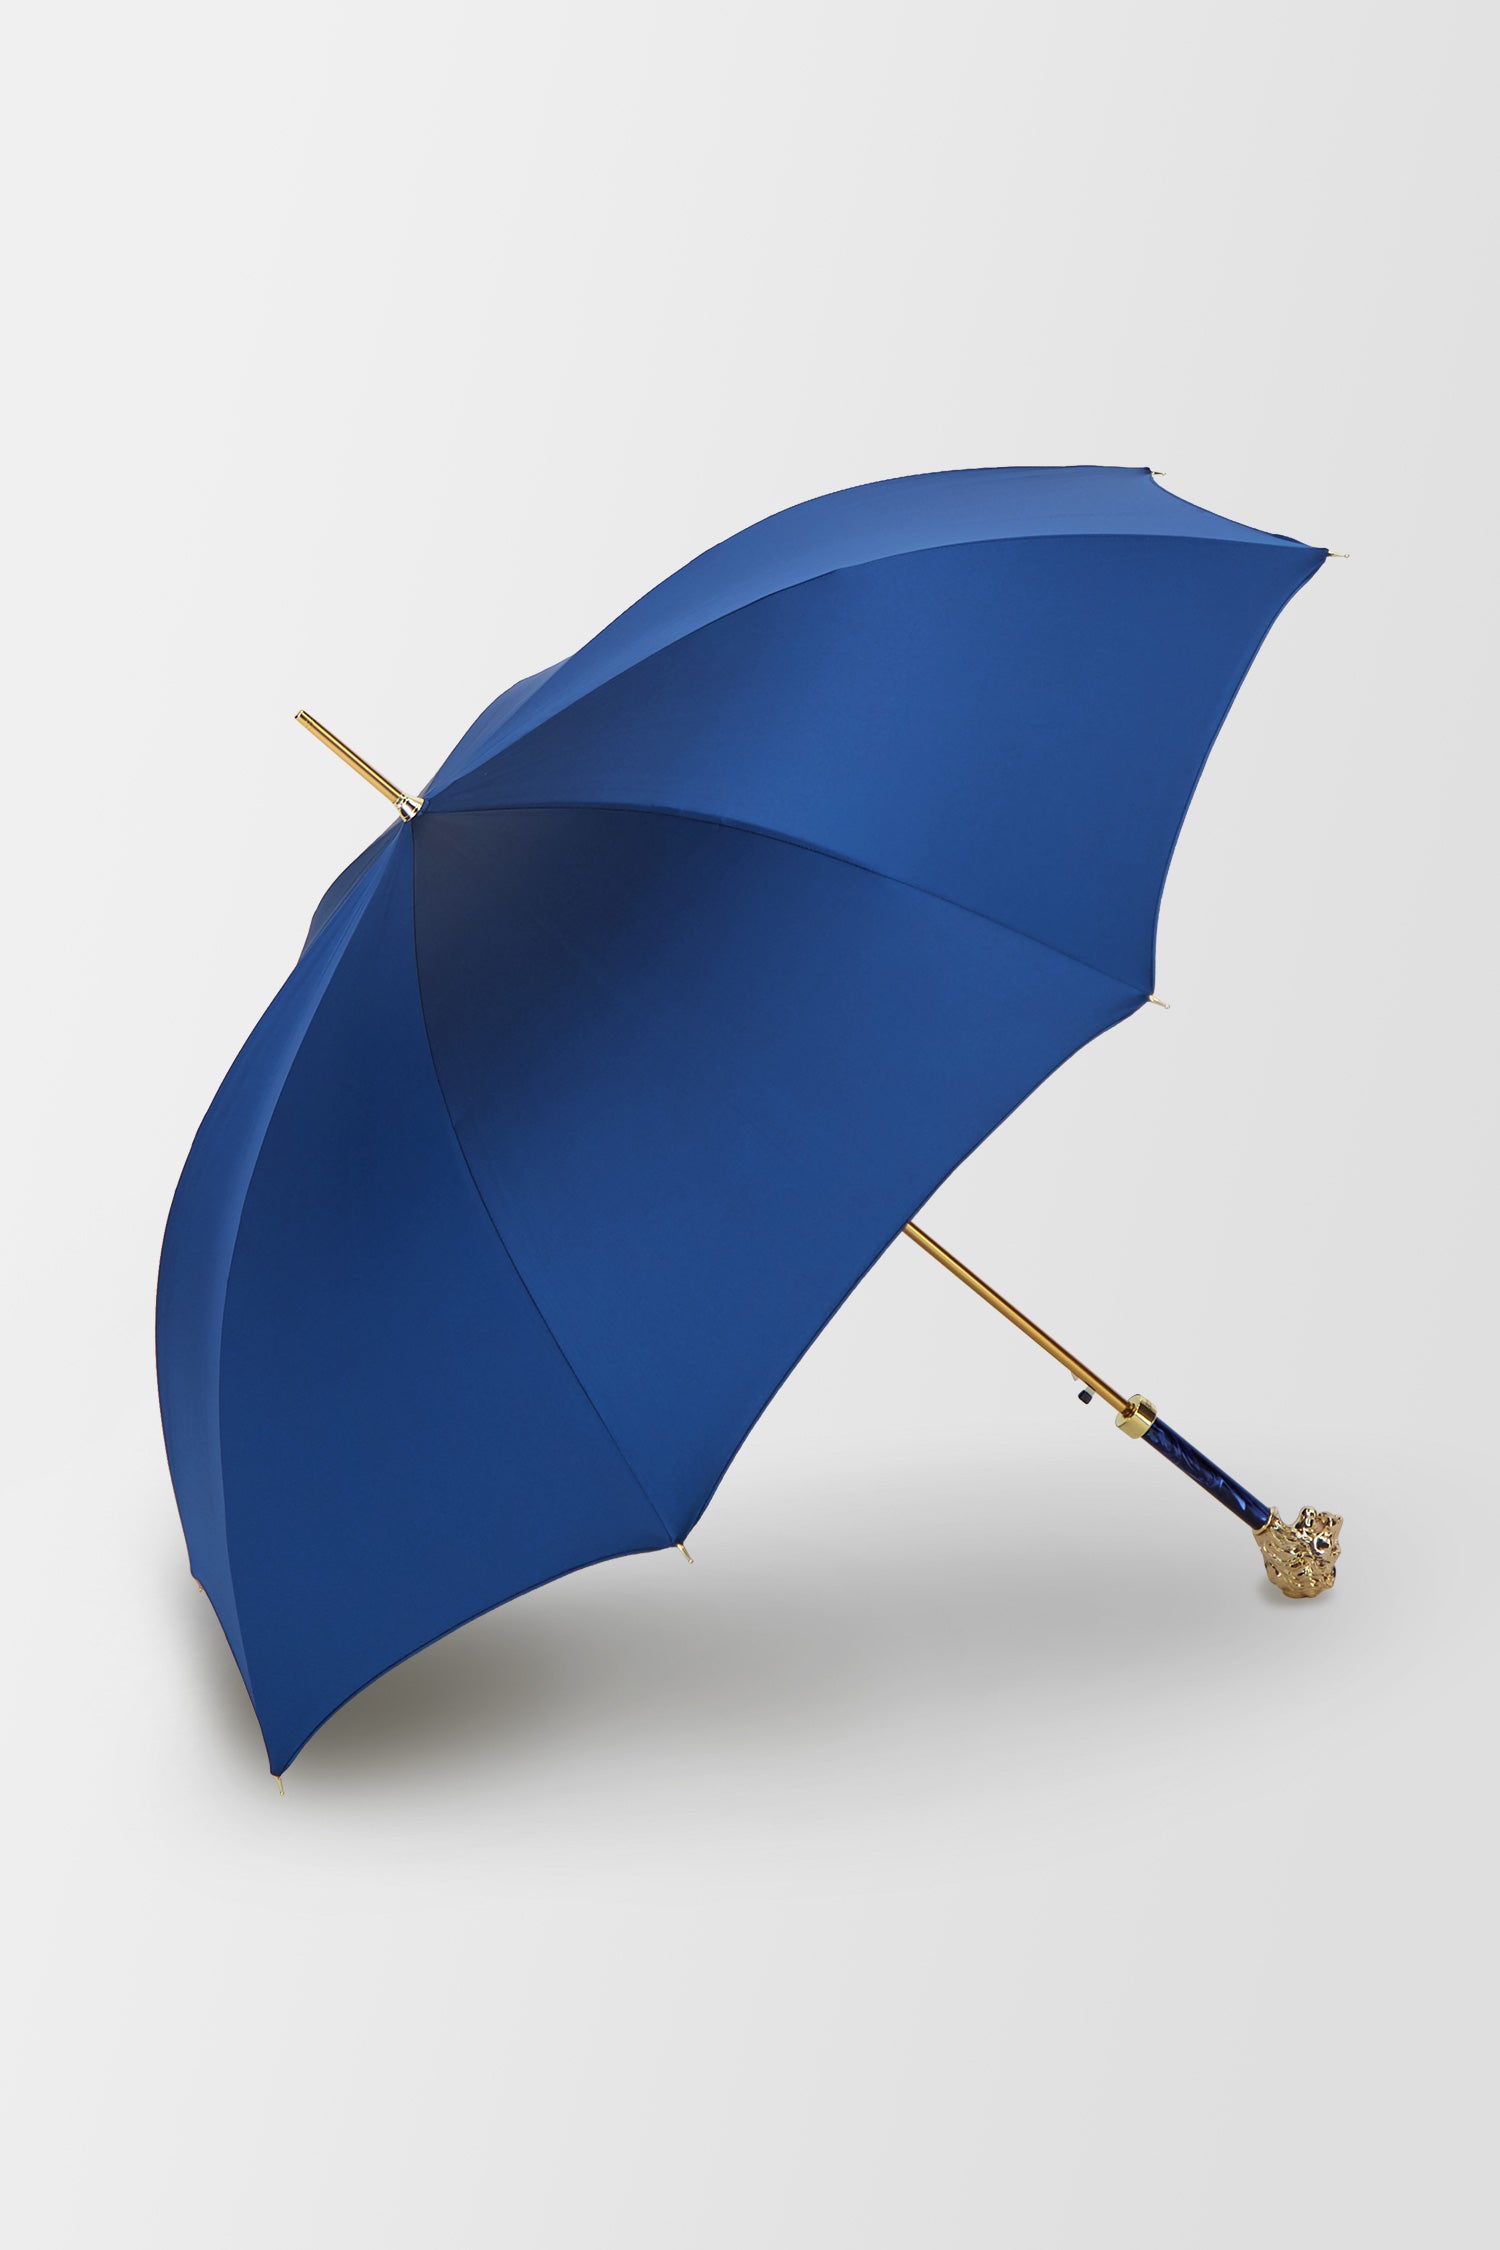 Pasotti Blue Umbrella with Gold Lion Handle